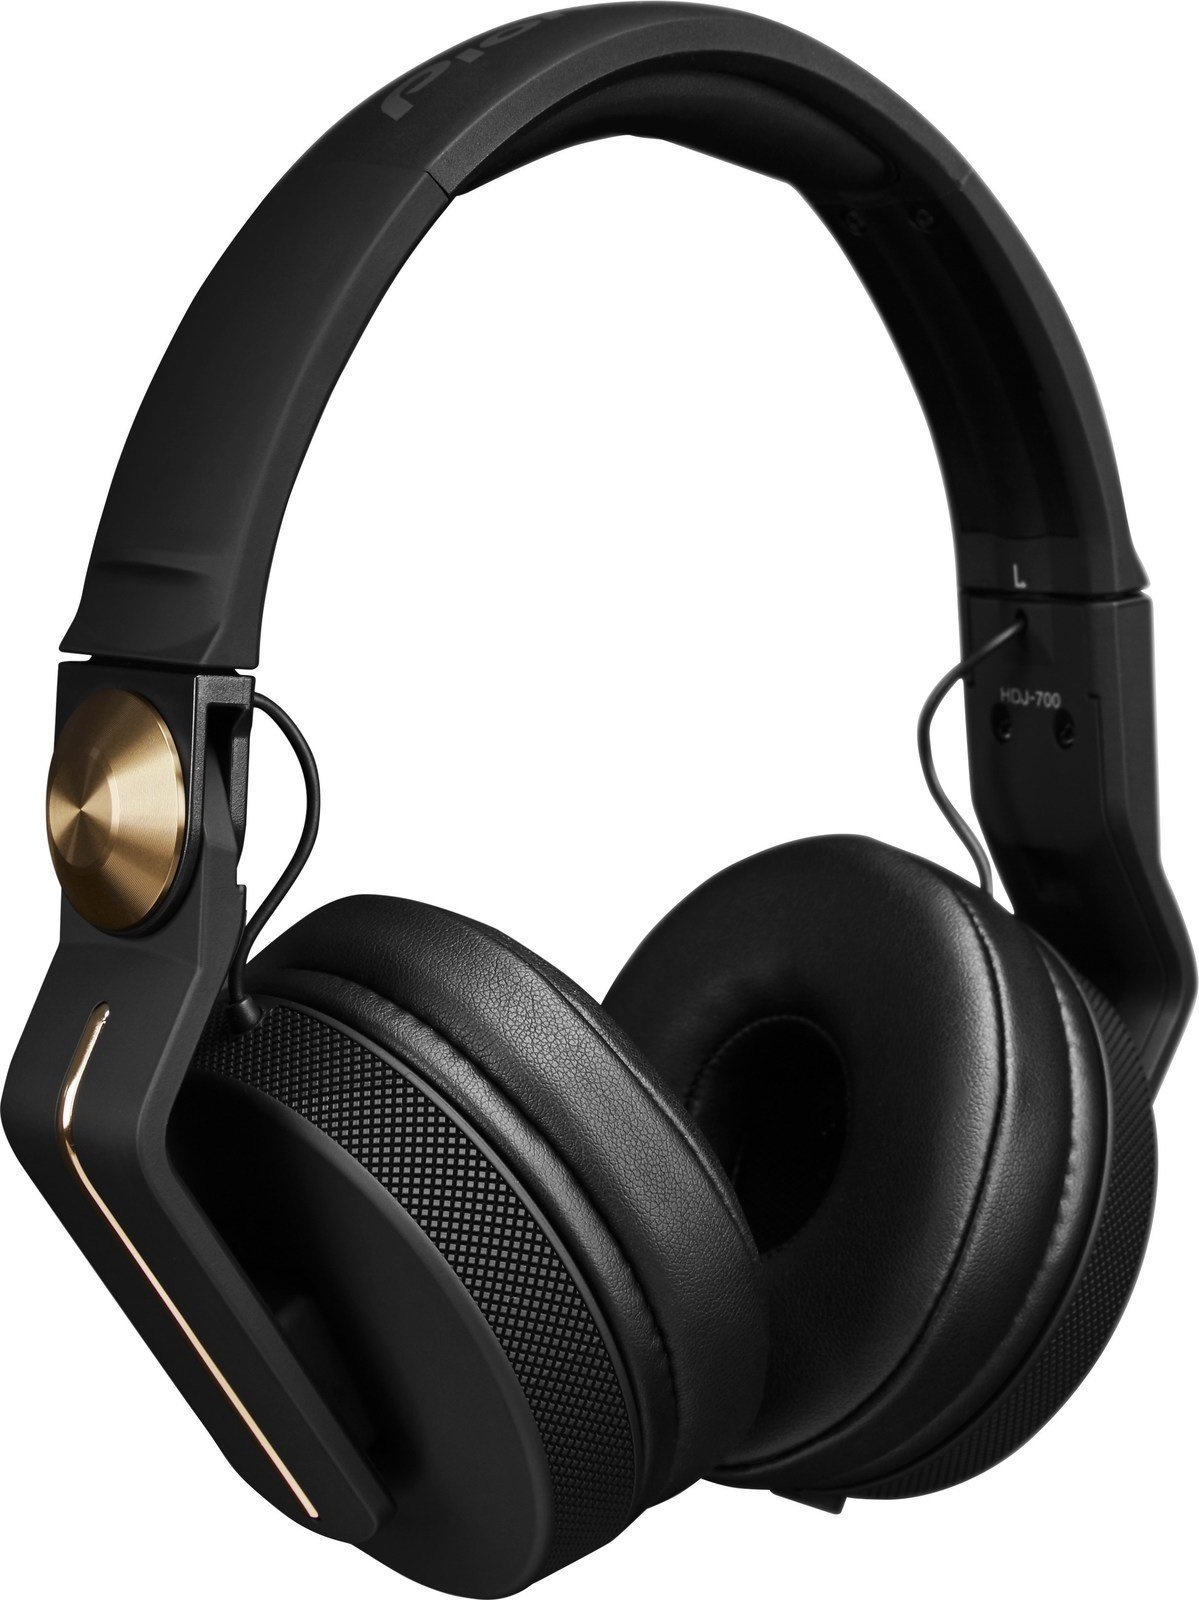 DJ Headphone Pioneer Dj HDJ-700-N Gold